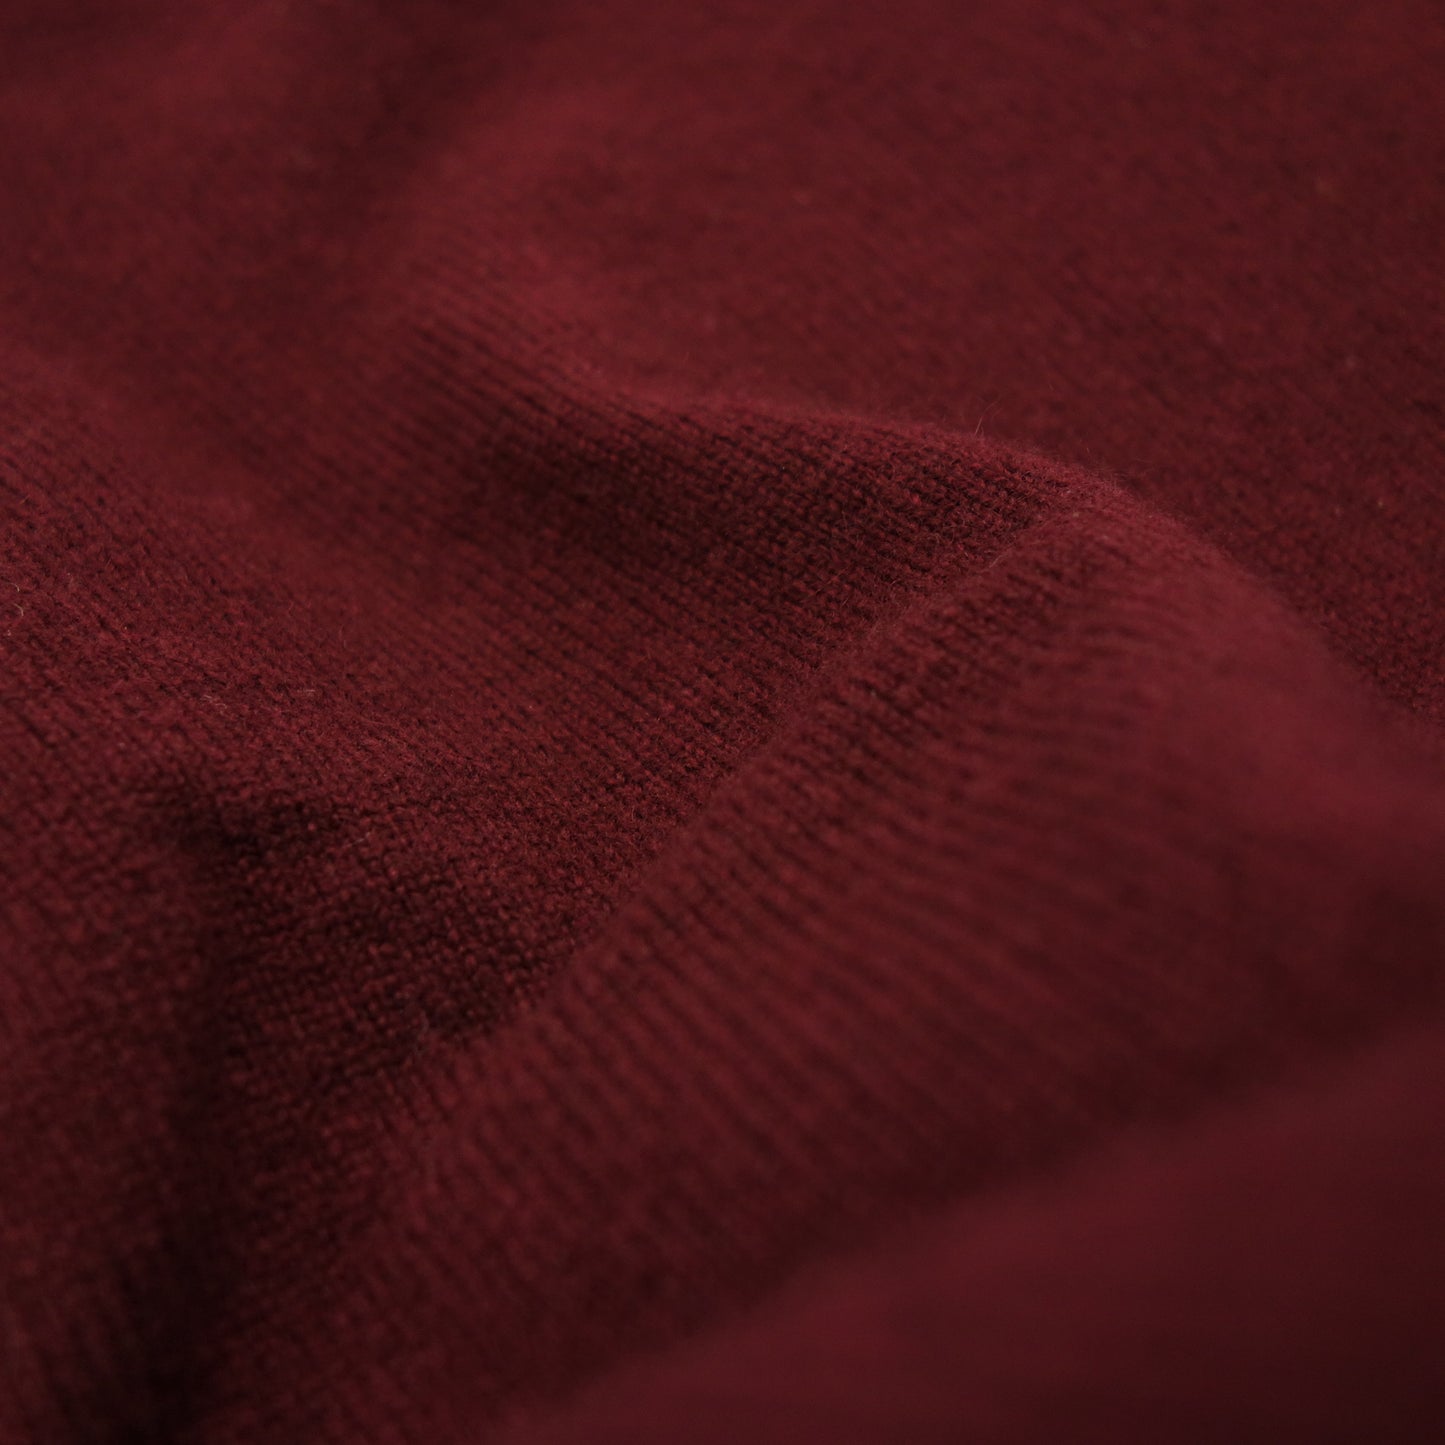 状态良好◆CHANEL 针织毛衣 V 领这里标记 98A 红色尺寸 40 女士 CHANEL [AFB3] 